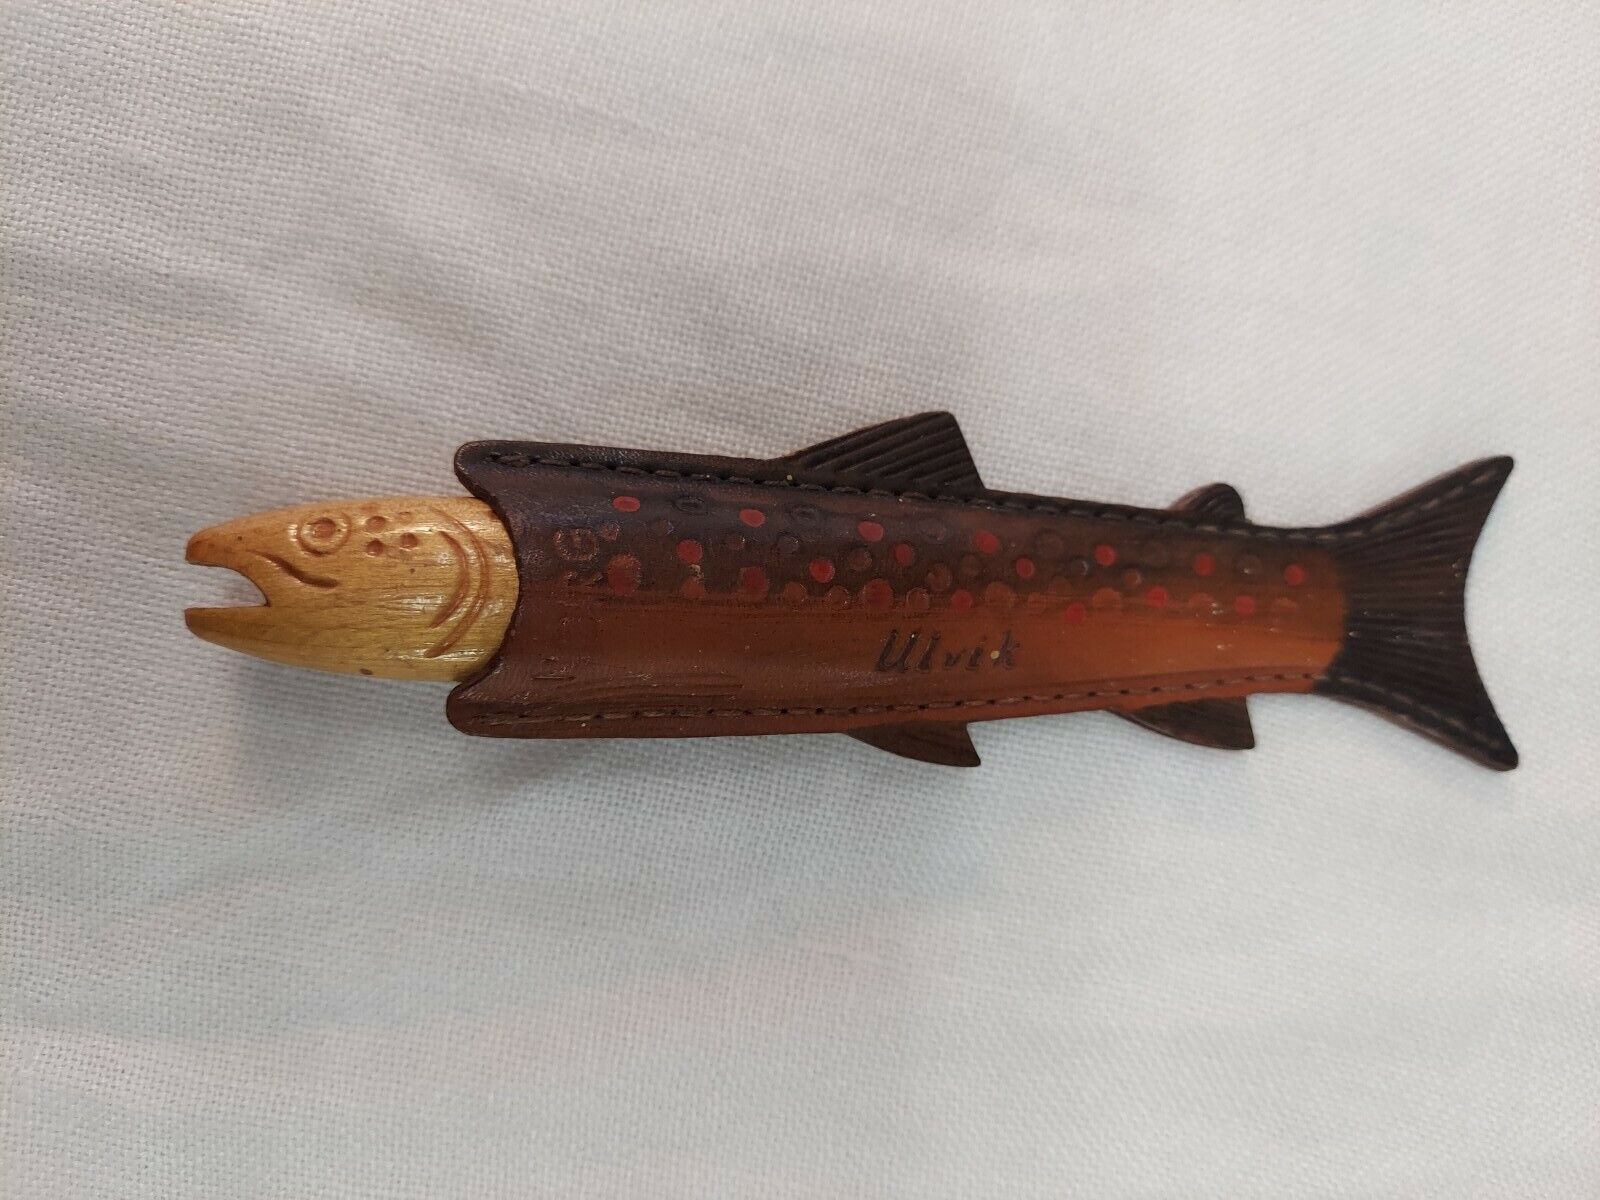 Vtg Norge carved wood handle fishing knife, leather sheath holder